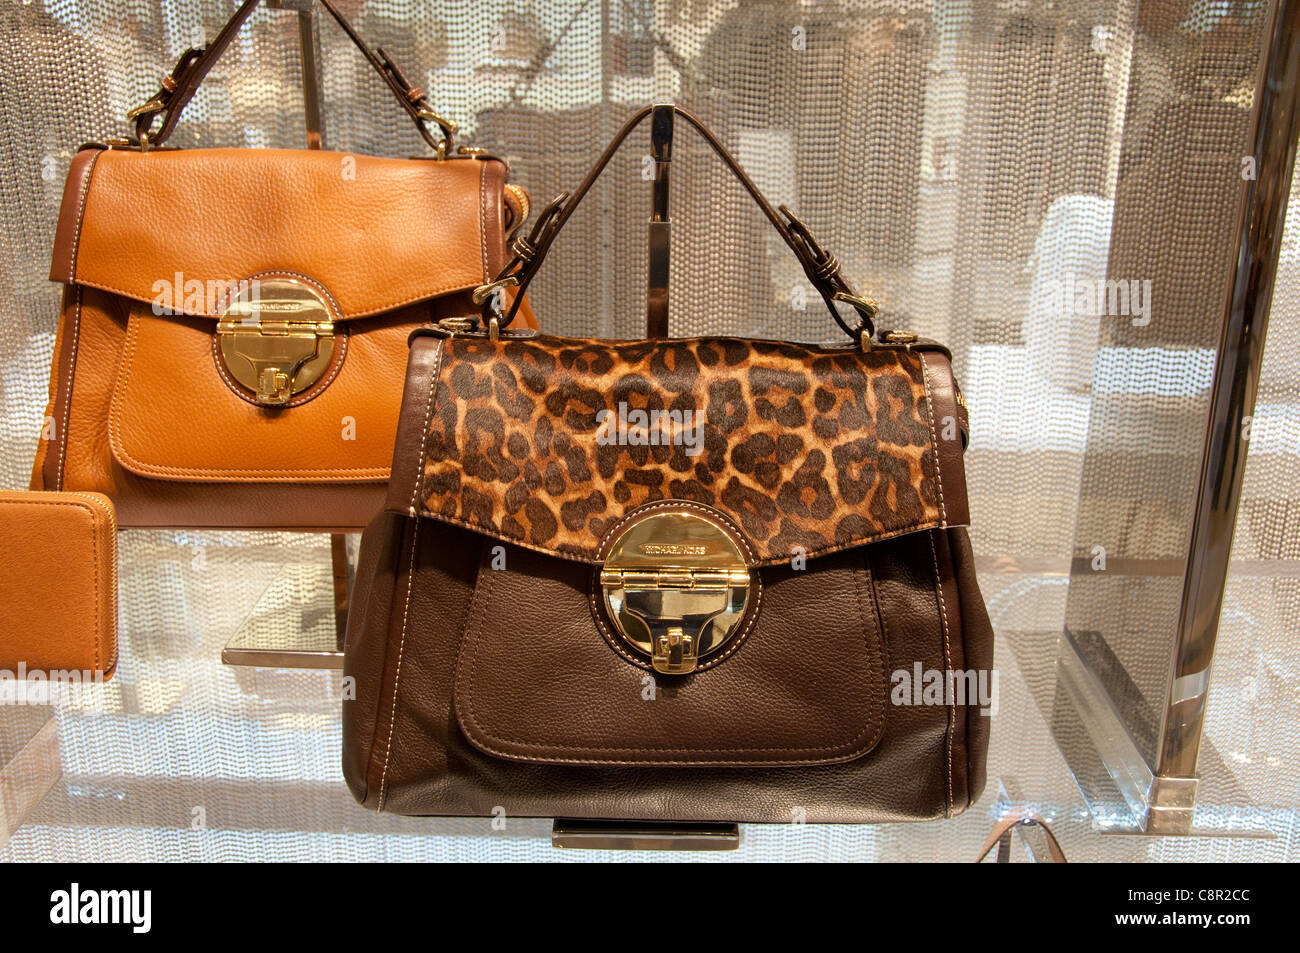 Bag Bags Michael Kors New York shop display window United states of ...